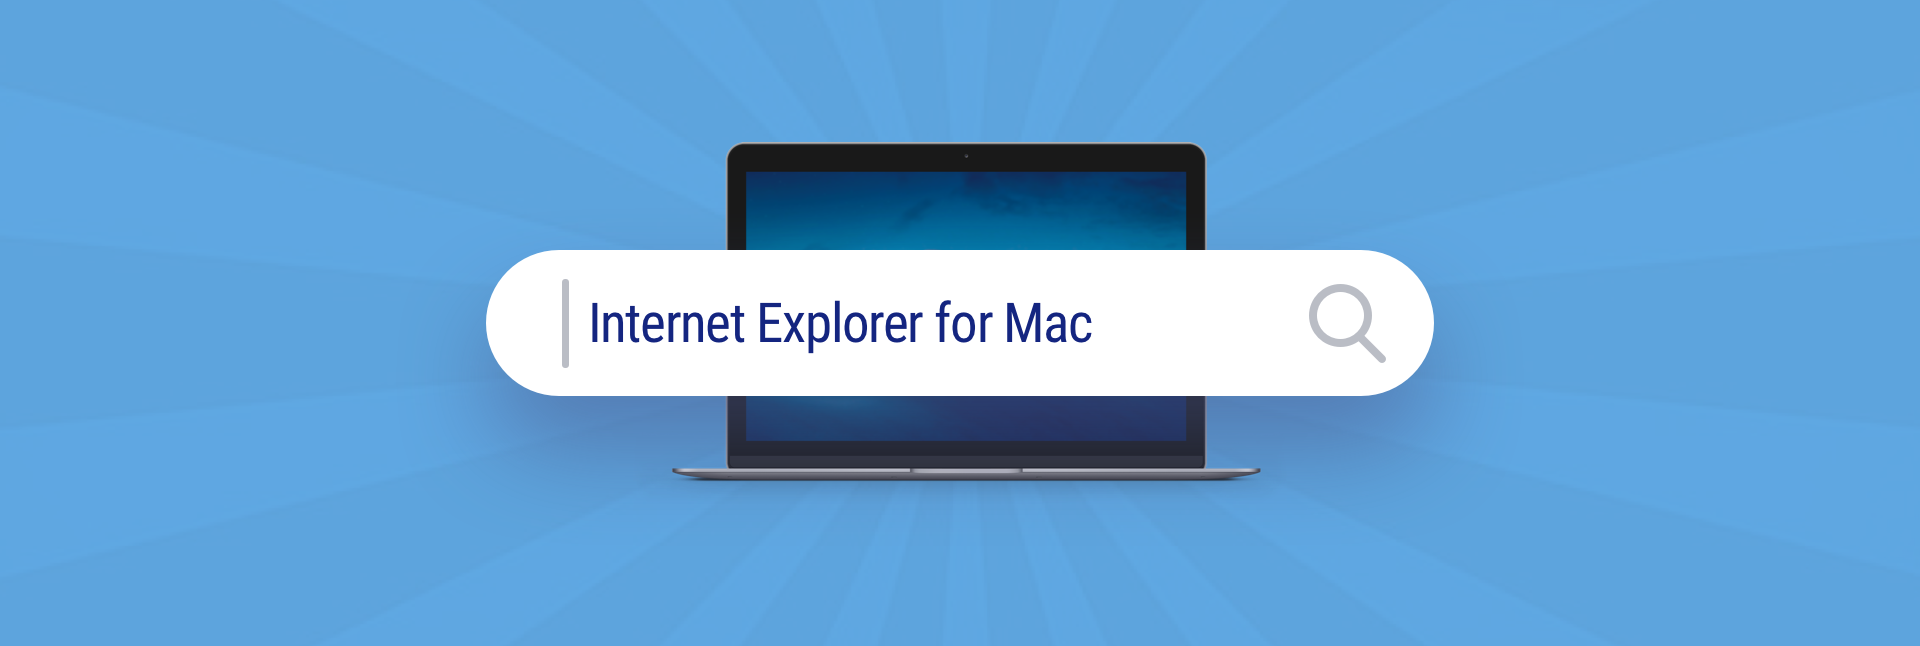 ms explorer for mac